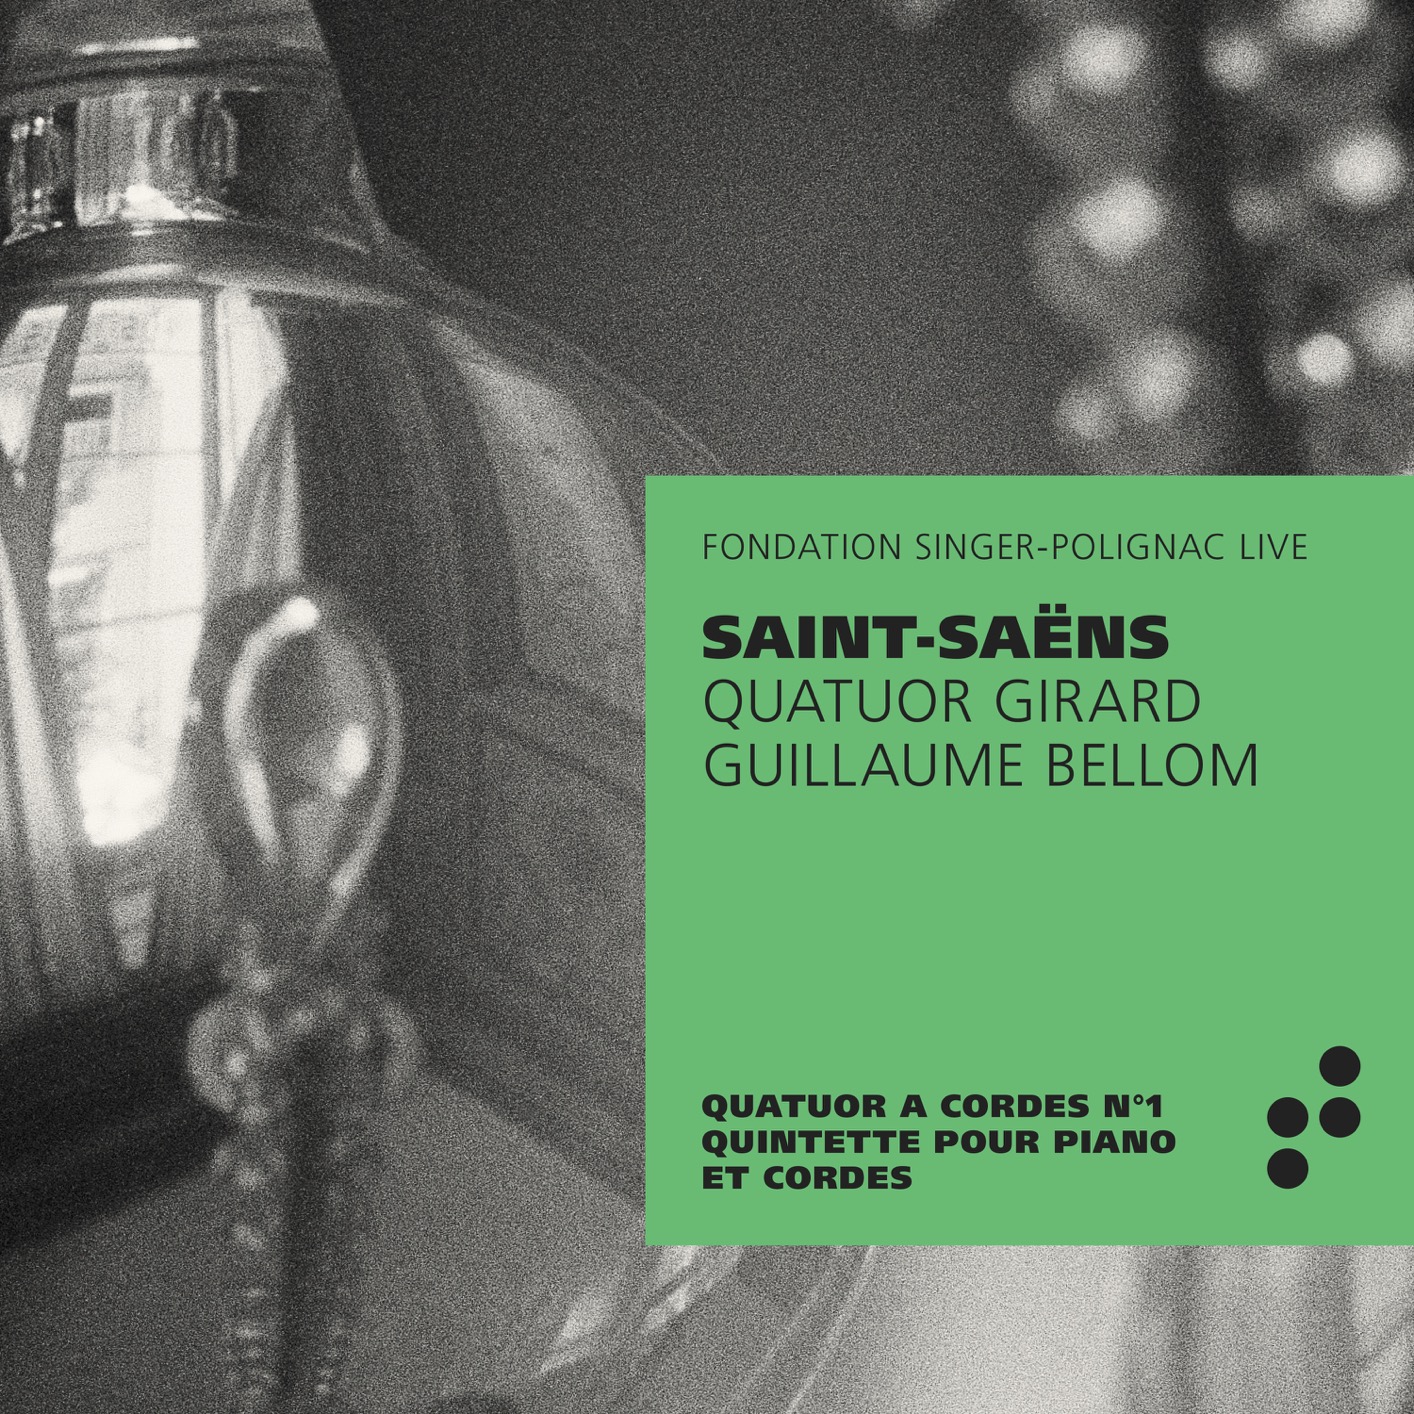 Quatuor Girard & Guillaume Bellom - Saint-Saens Quatuor A cordes No. 1 (2019) [FLAC 24bit/96kHz]